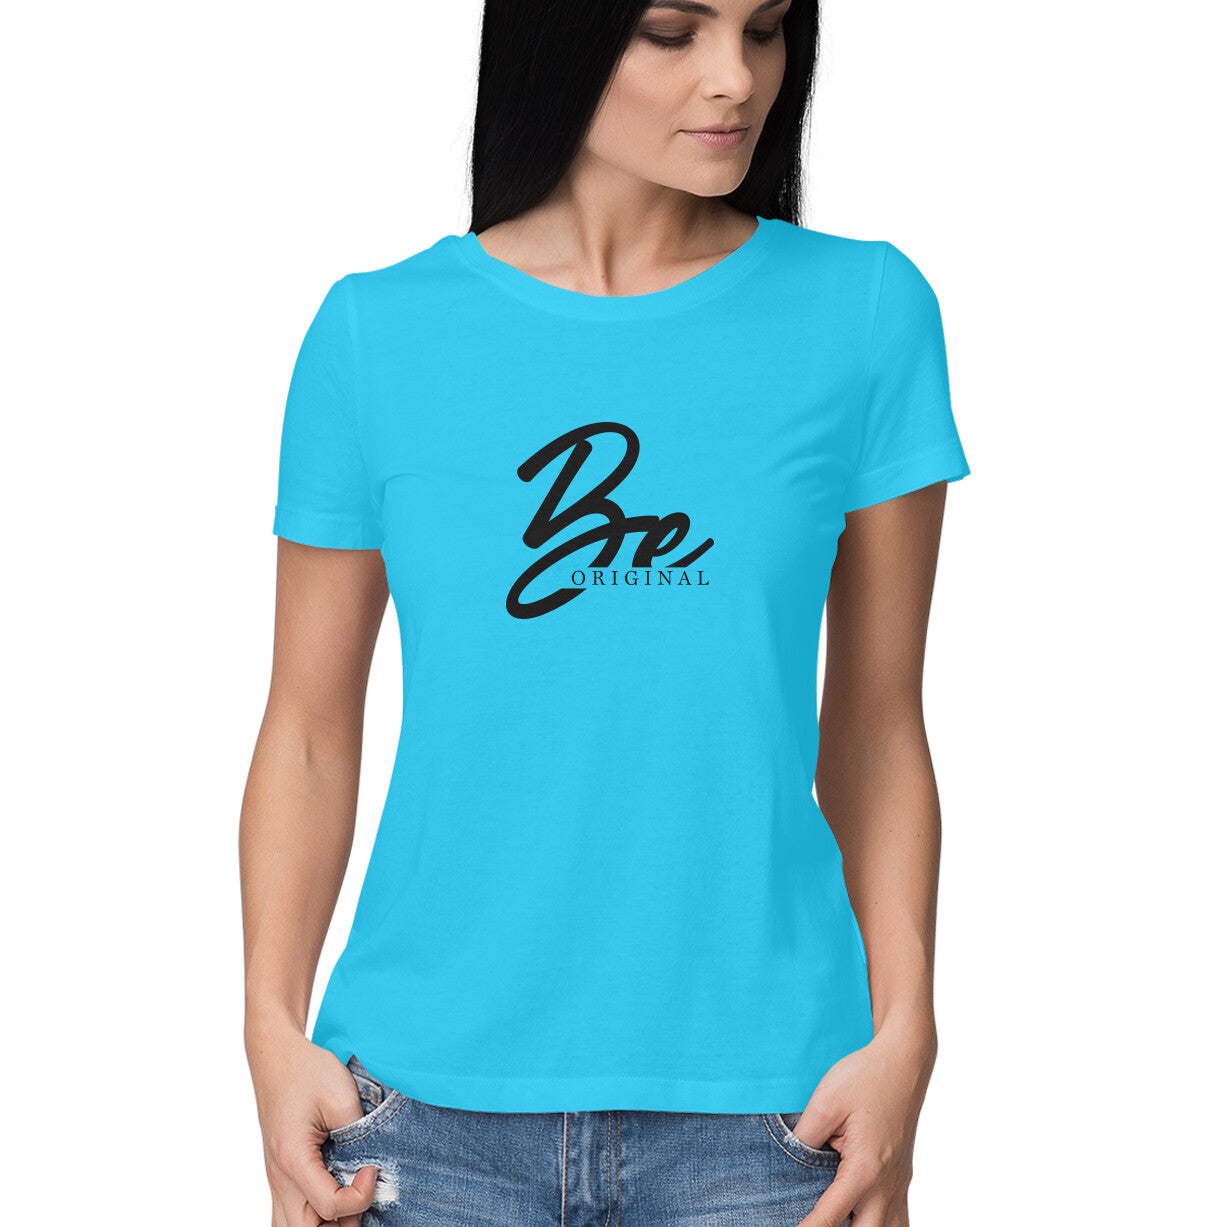 Be Original | Women's T-Shirt | FairyBellsKart | Rs. 699.00